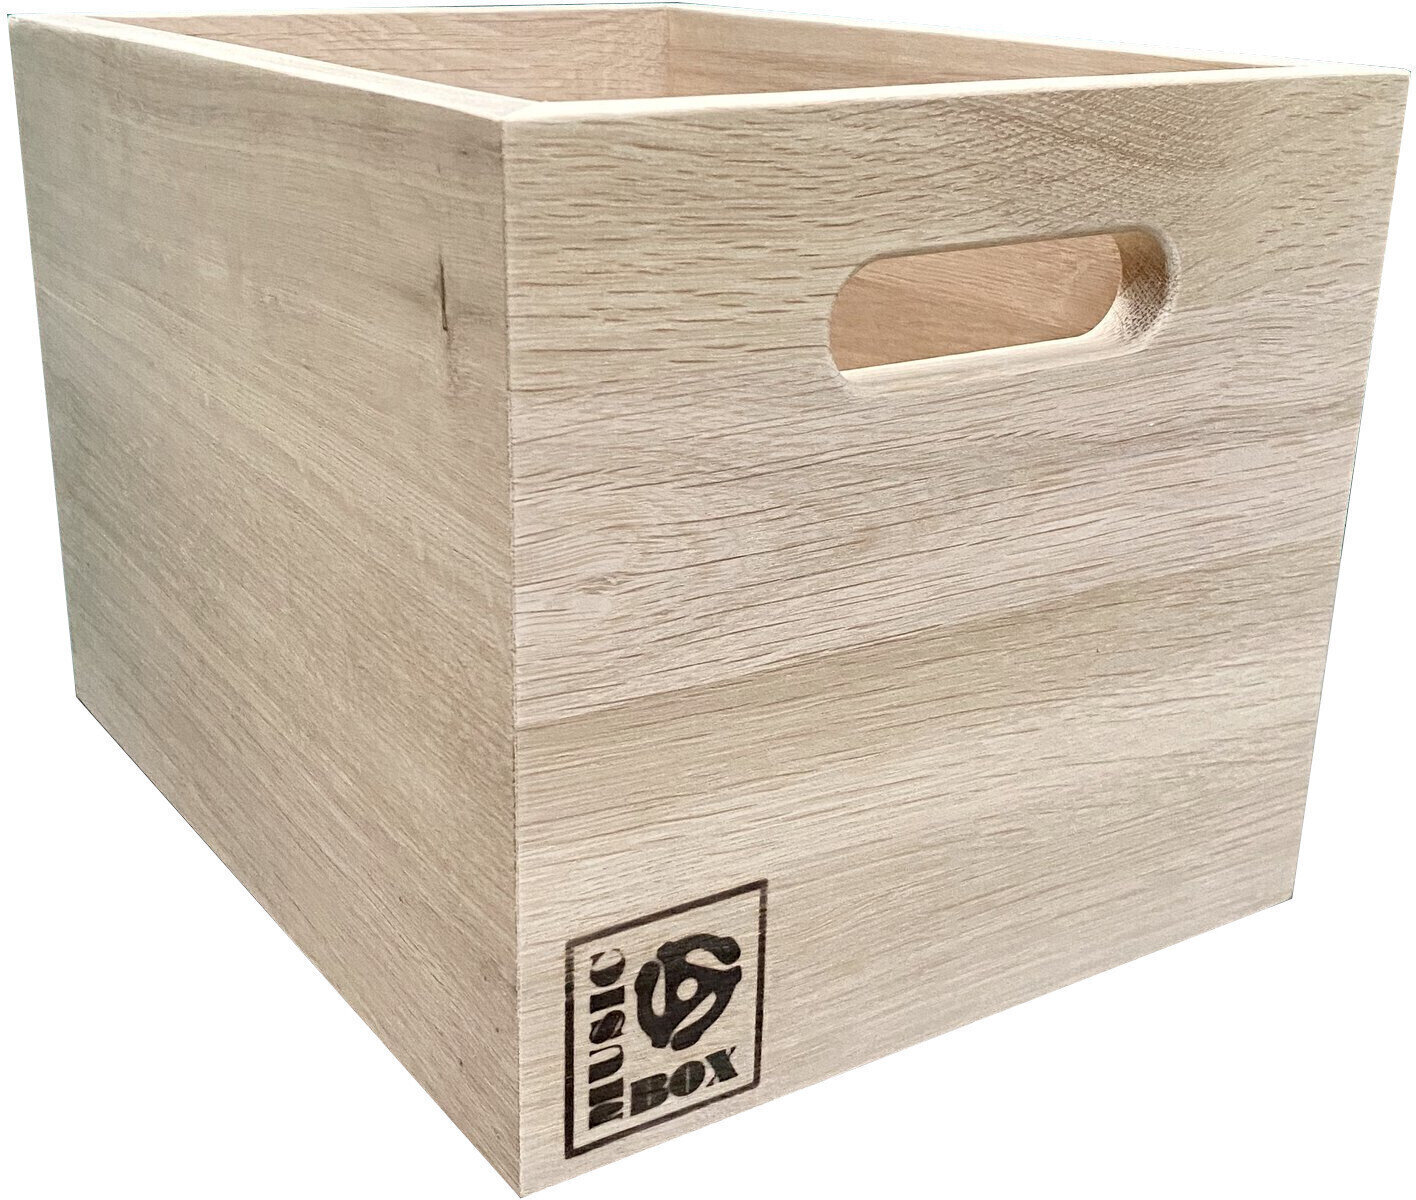 Vinyl Record Box Music Box Designs 7 inch Vinyl Storage Box- ‘Singles Going Steady' Natural Oak